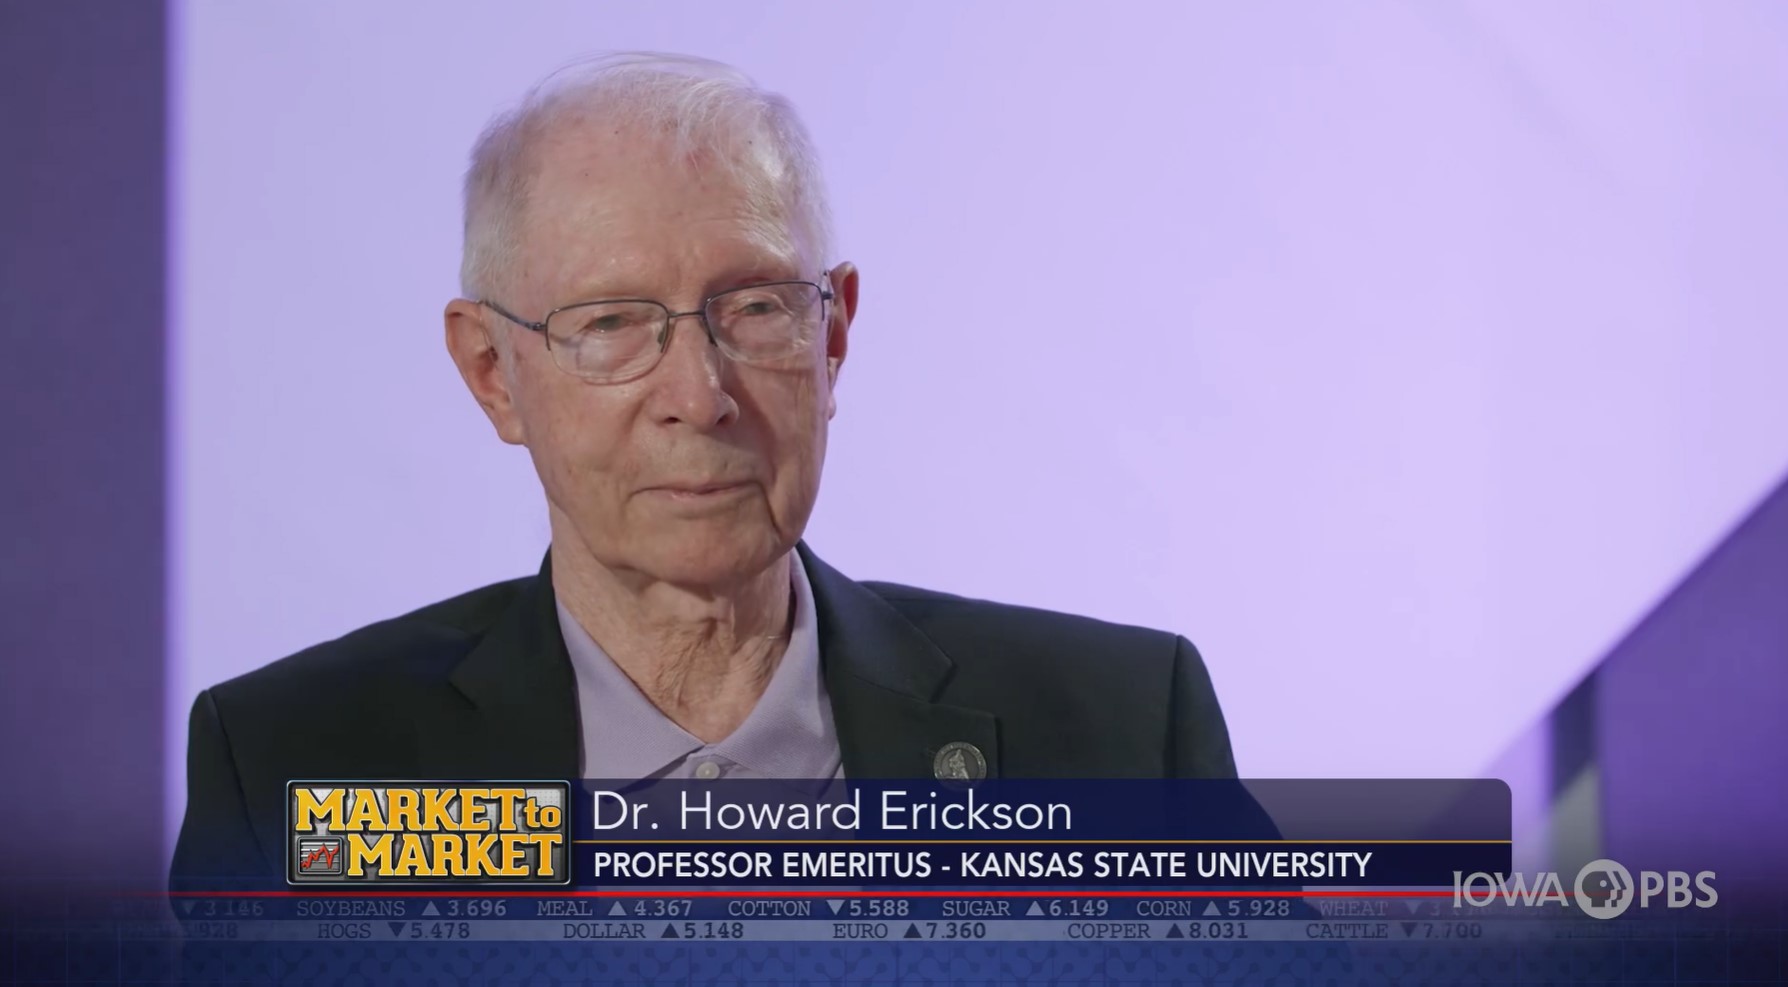 Drs. Howard Erickson